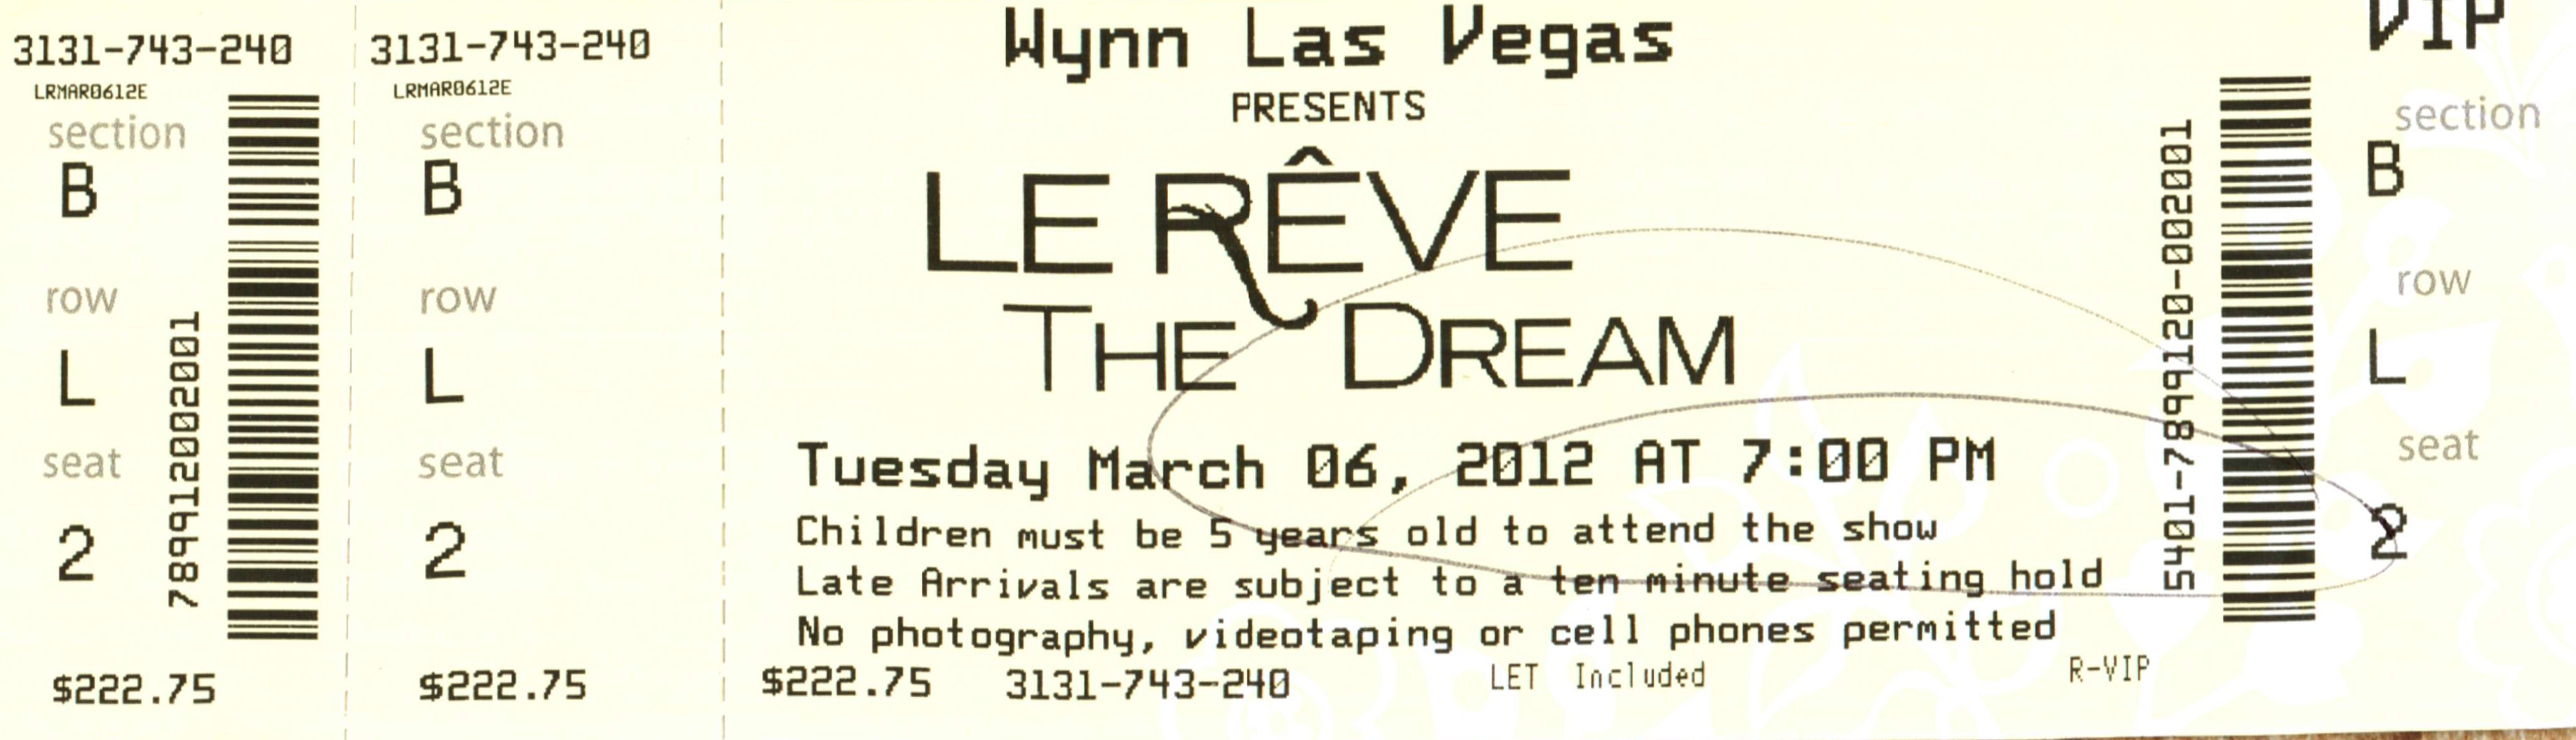 Wynn Le Reve The Dream Ticket
